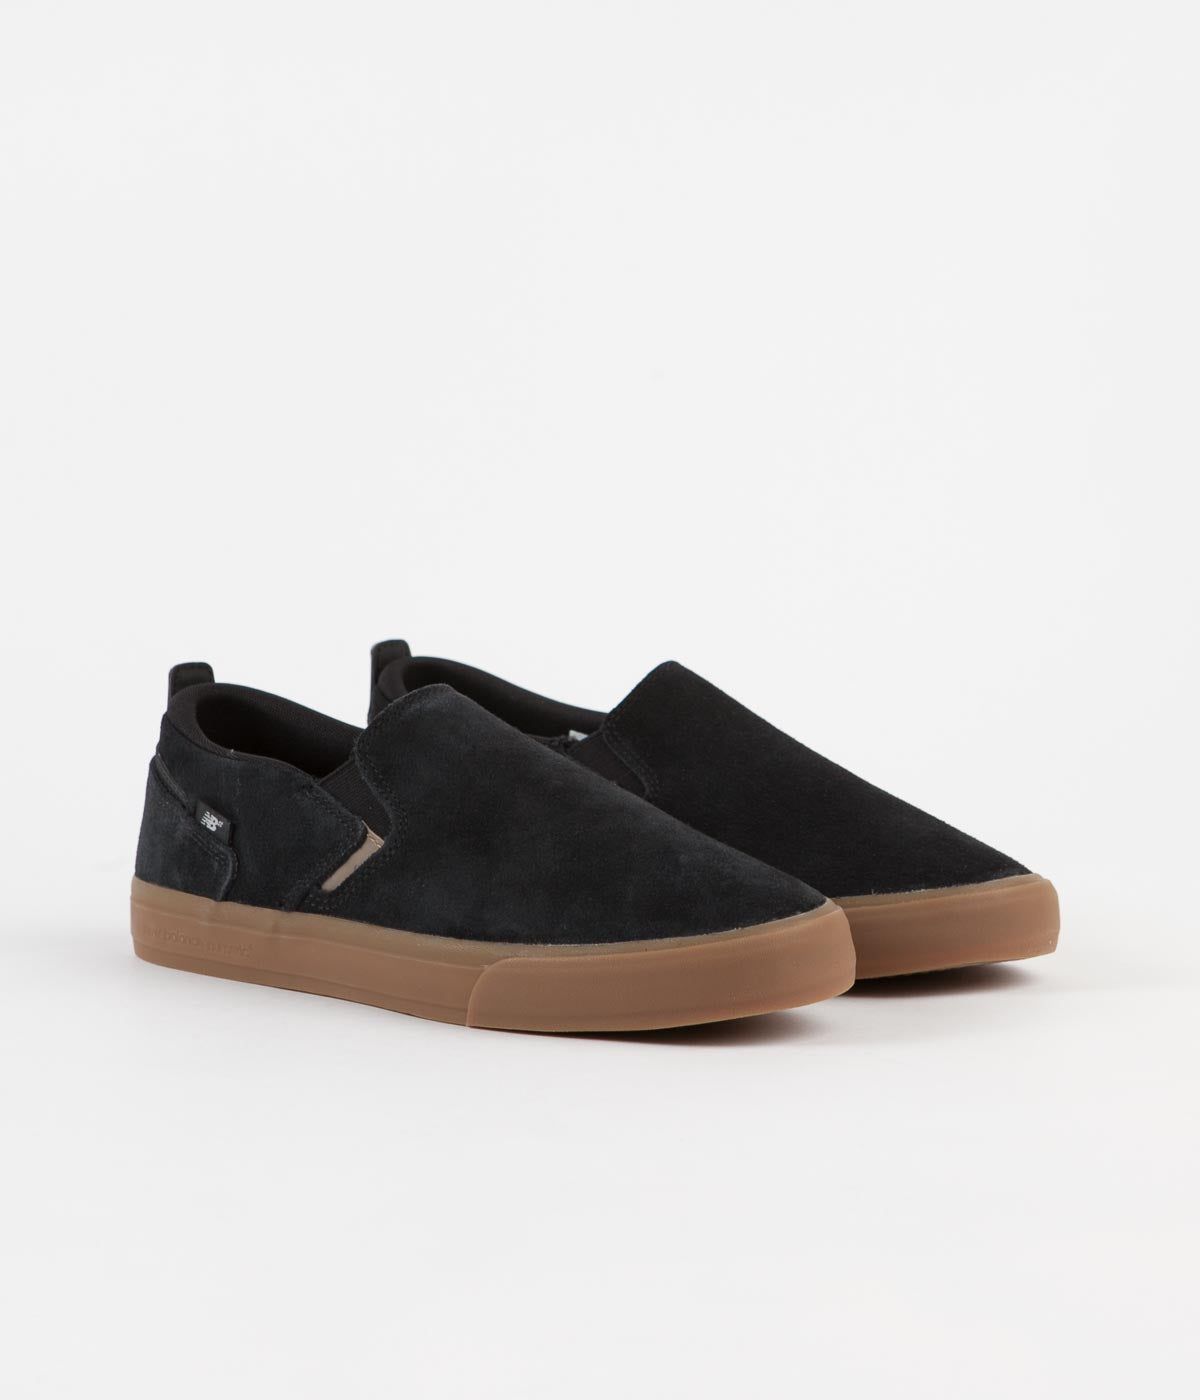 New Balance Numeric 306 Jamie Foy Slip On Shoes - Black | Flatspot